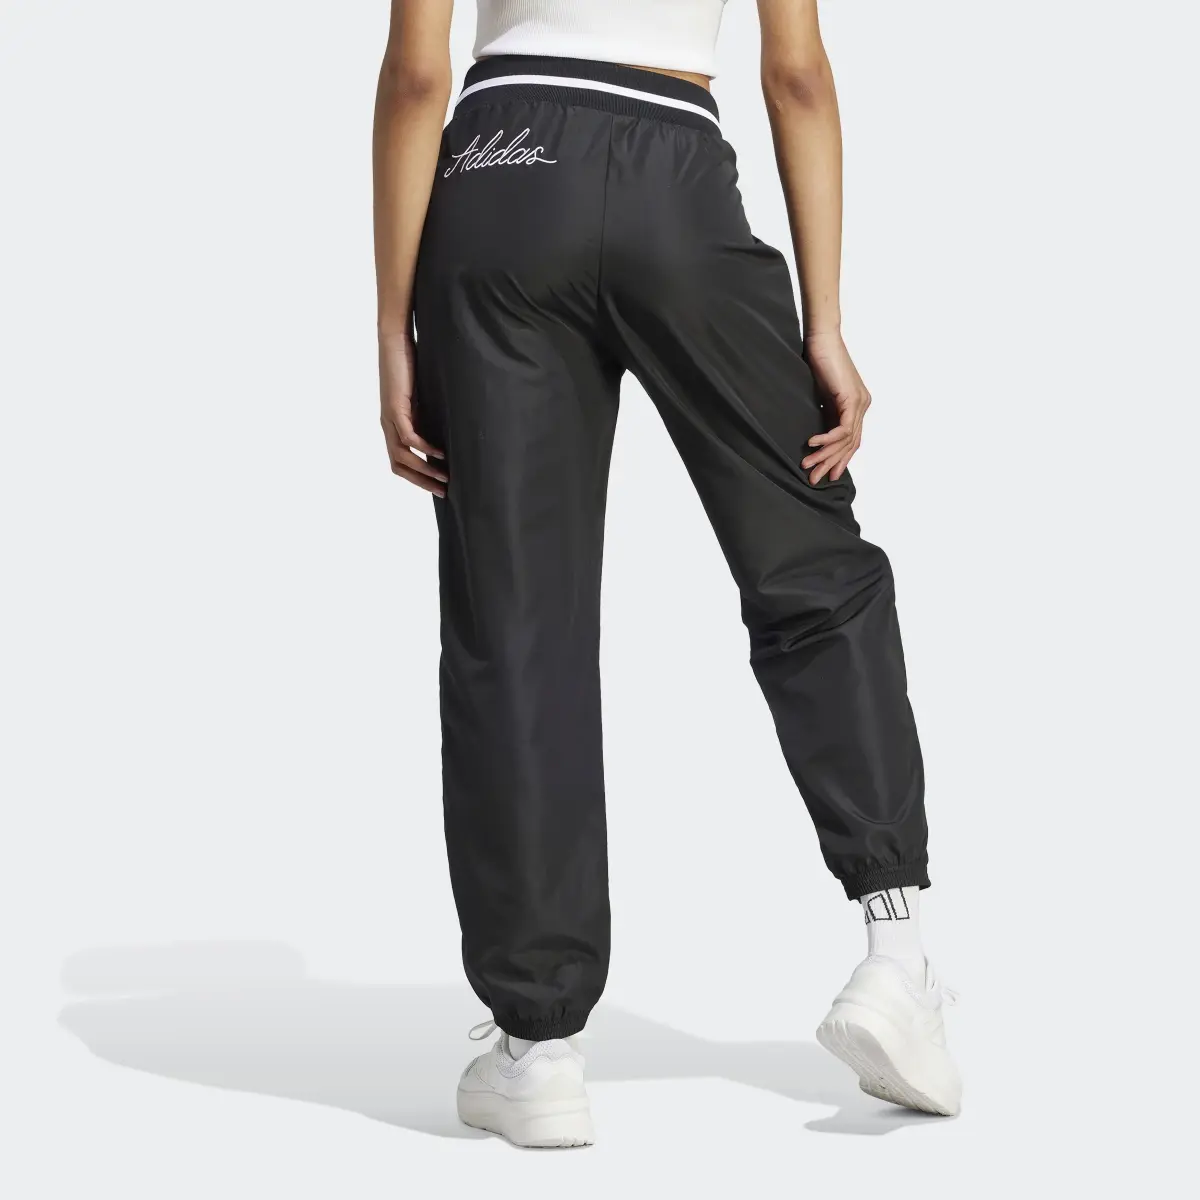 Adidas Scribble Woven Pants. 2